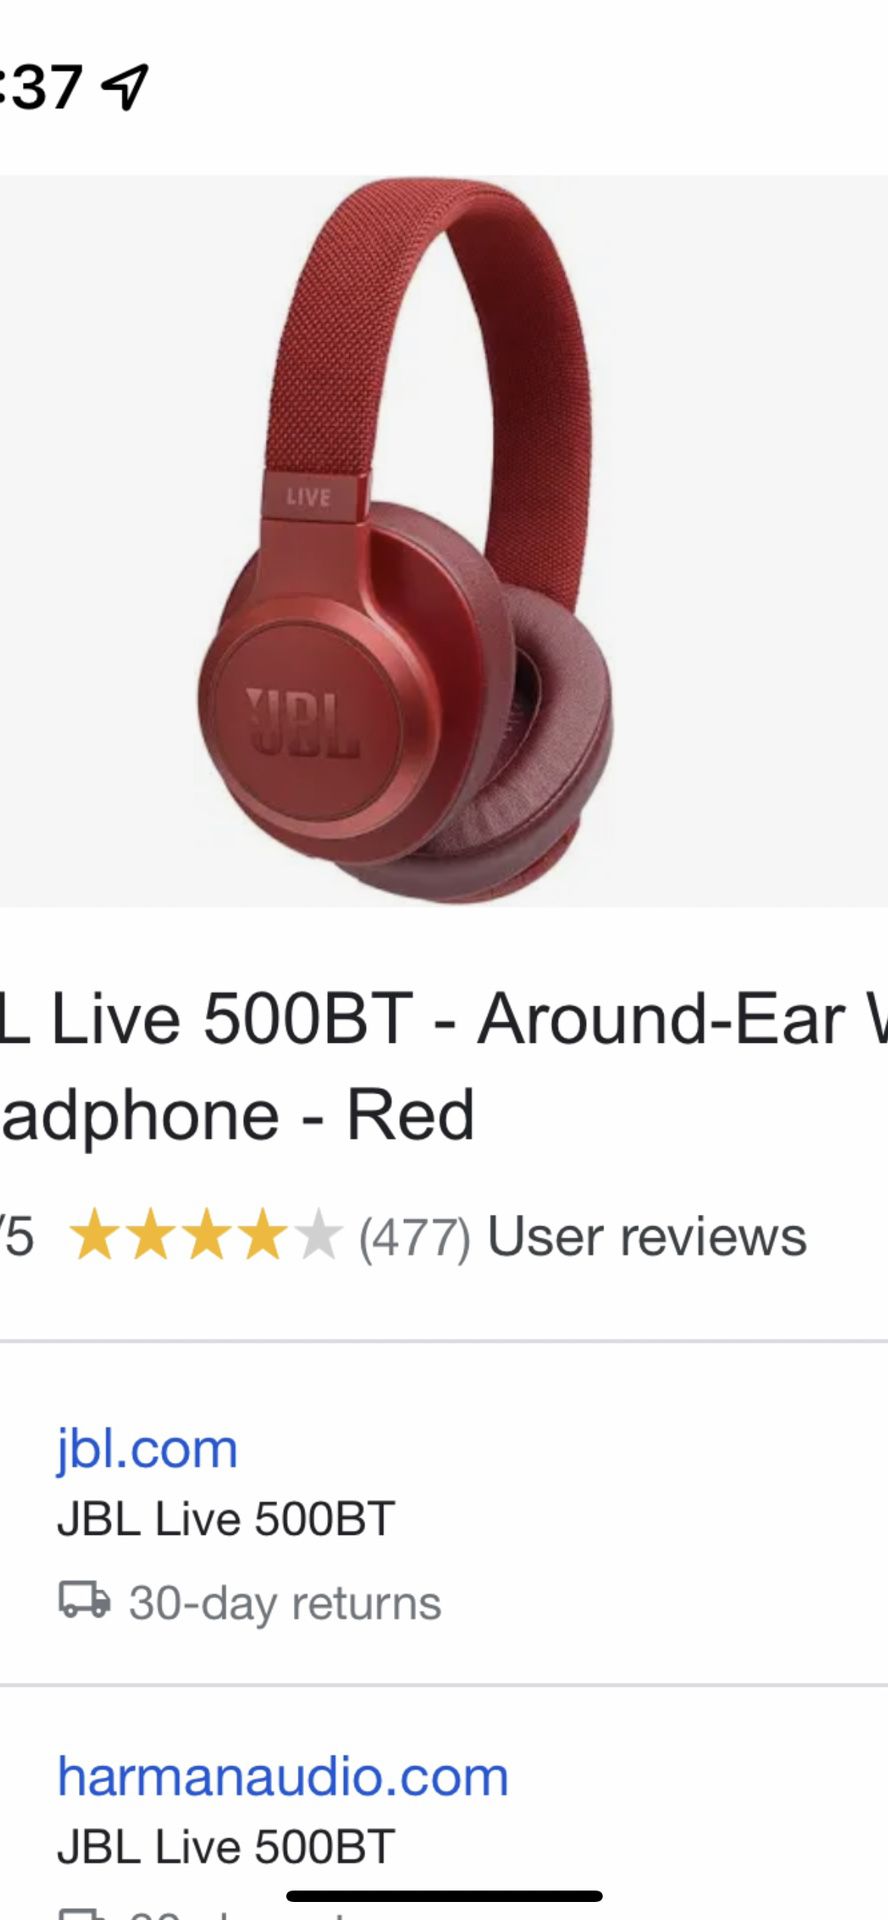 JBL headphones 500BT